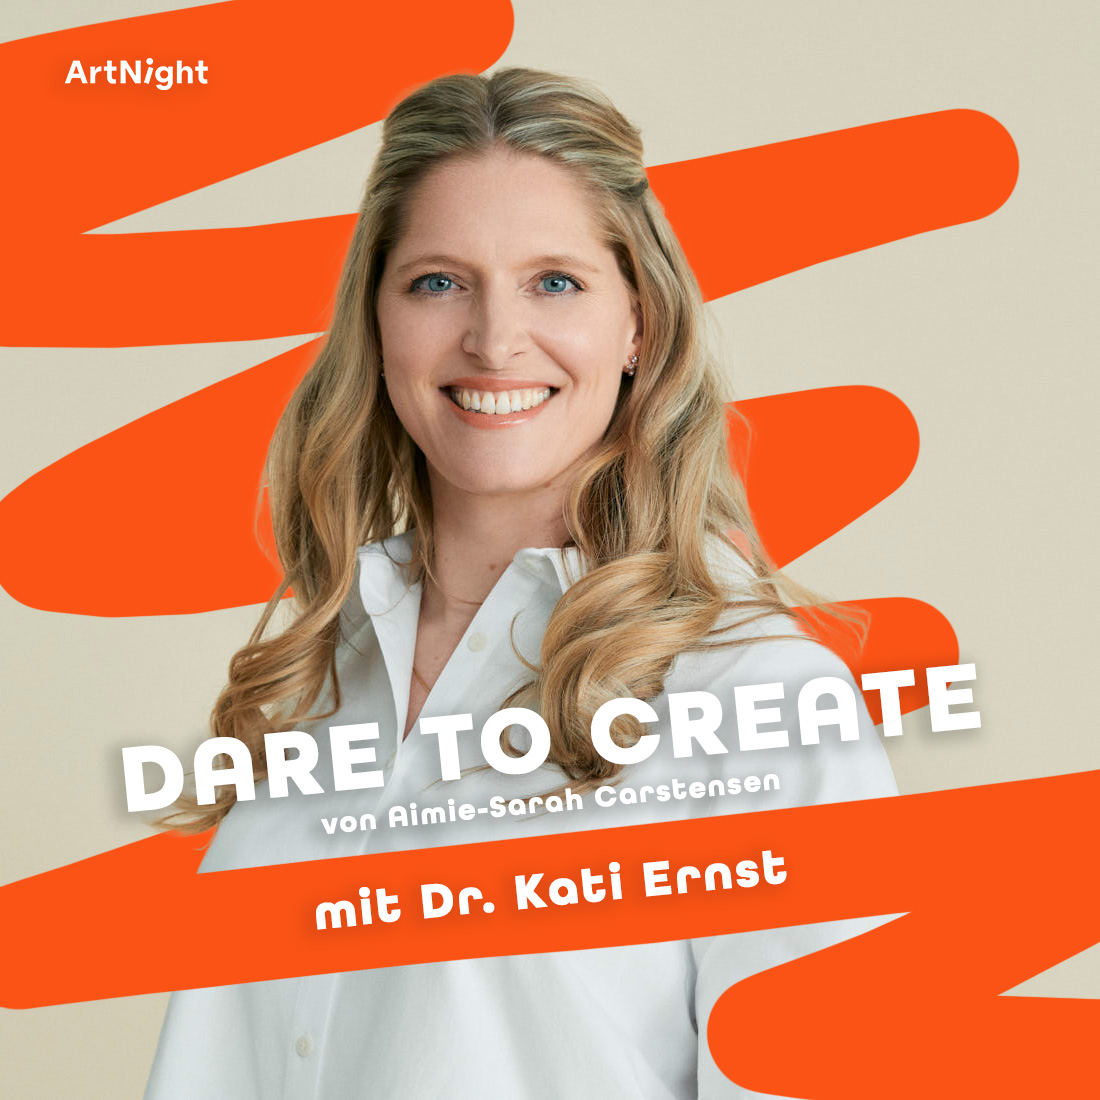 Dr. Kati Ernst